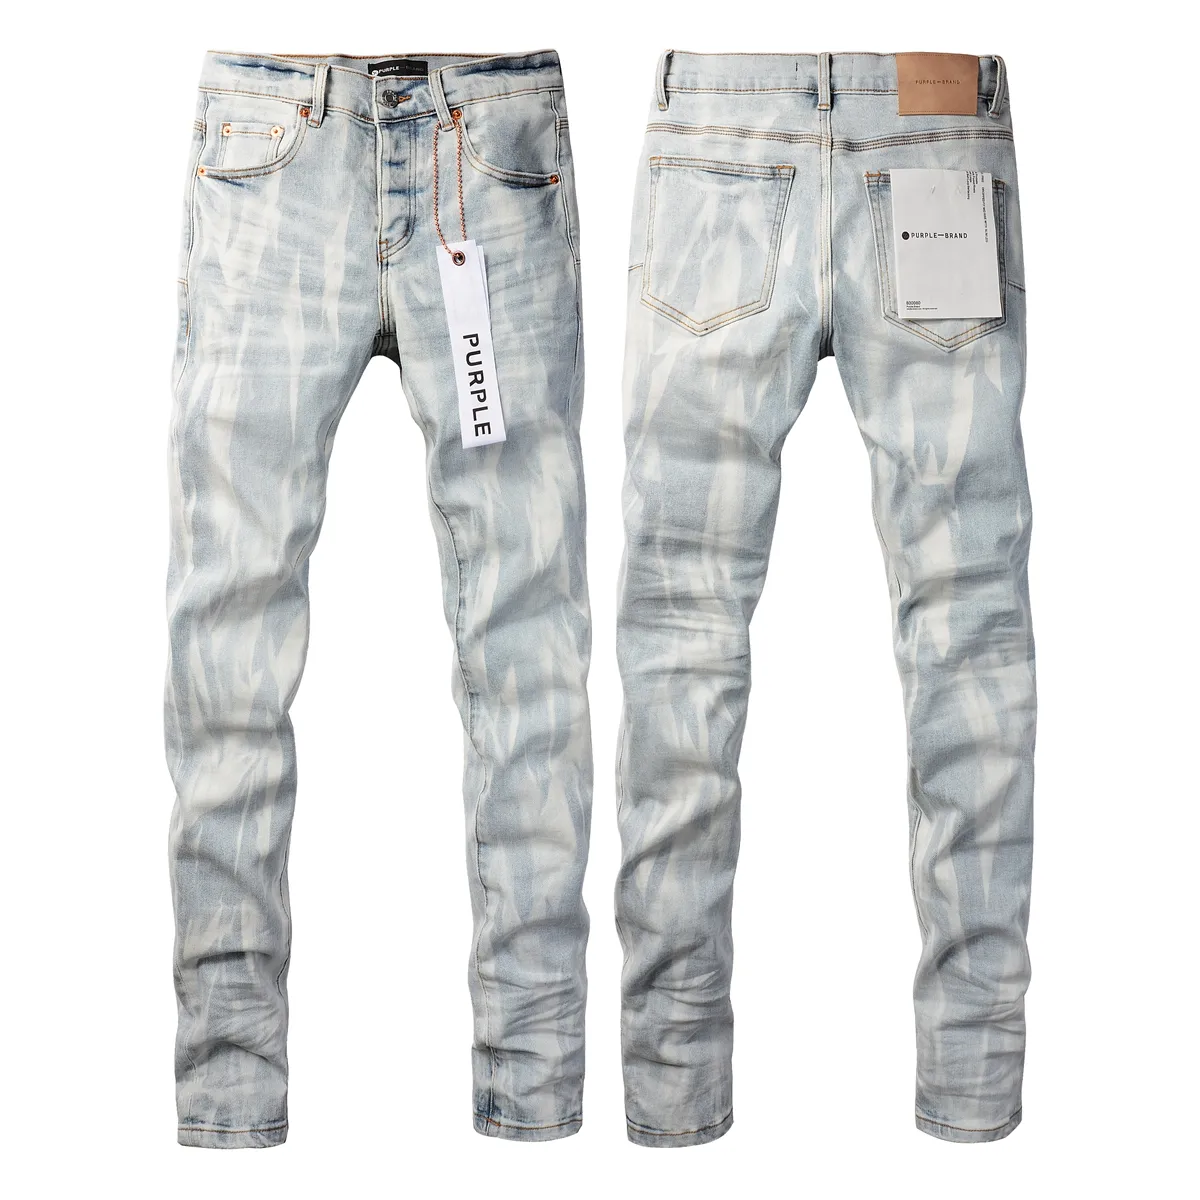 Lila Jeans höhere Hosen lila Marke Jeans Lila Designer Männer Herren Jeans höchste Qualität